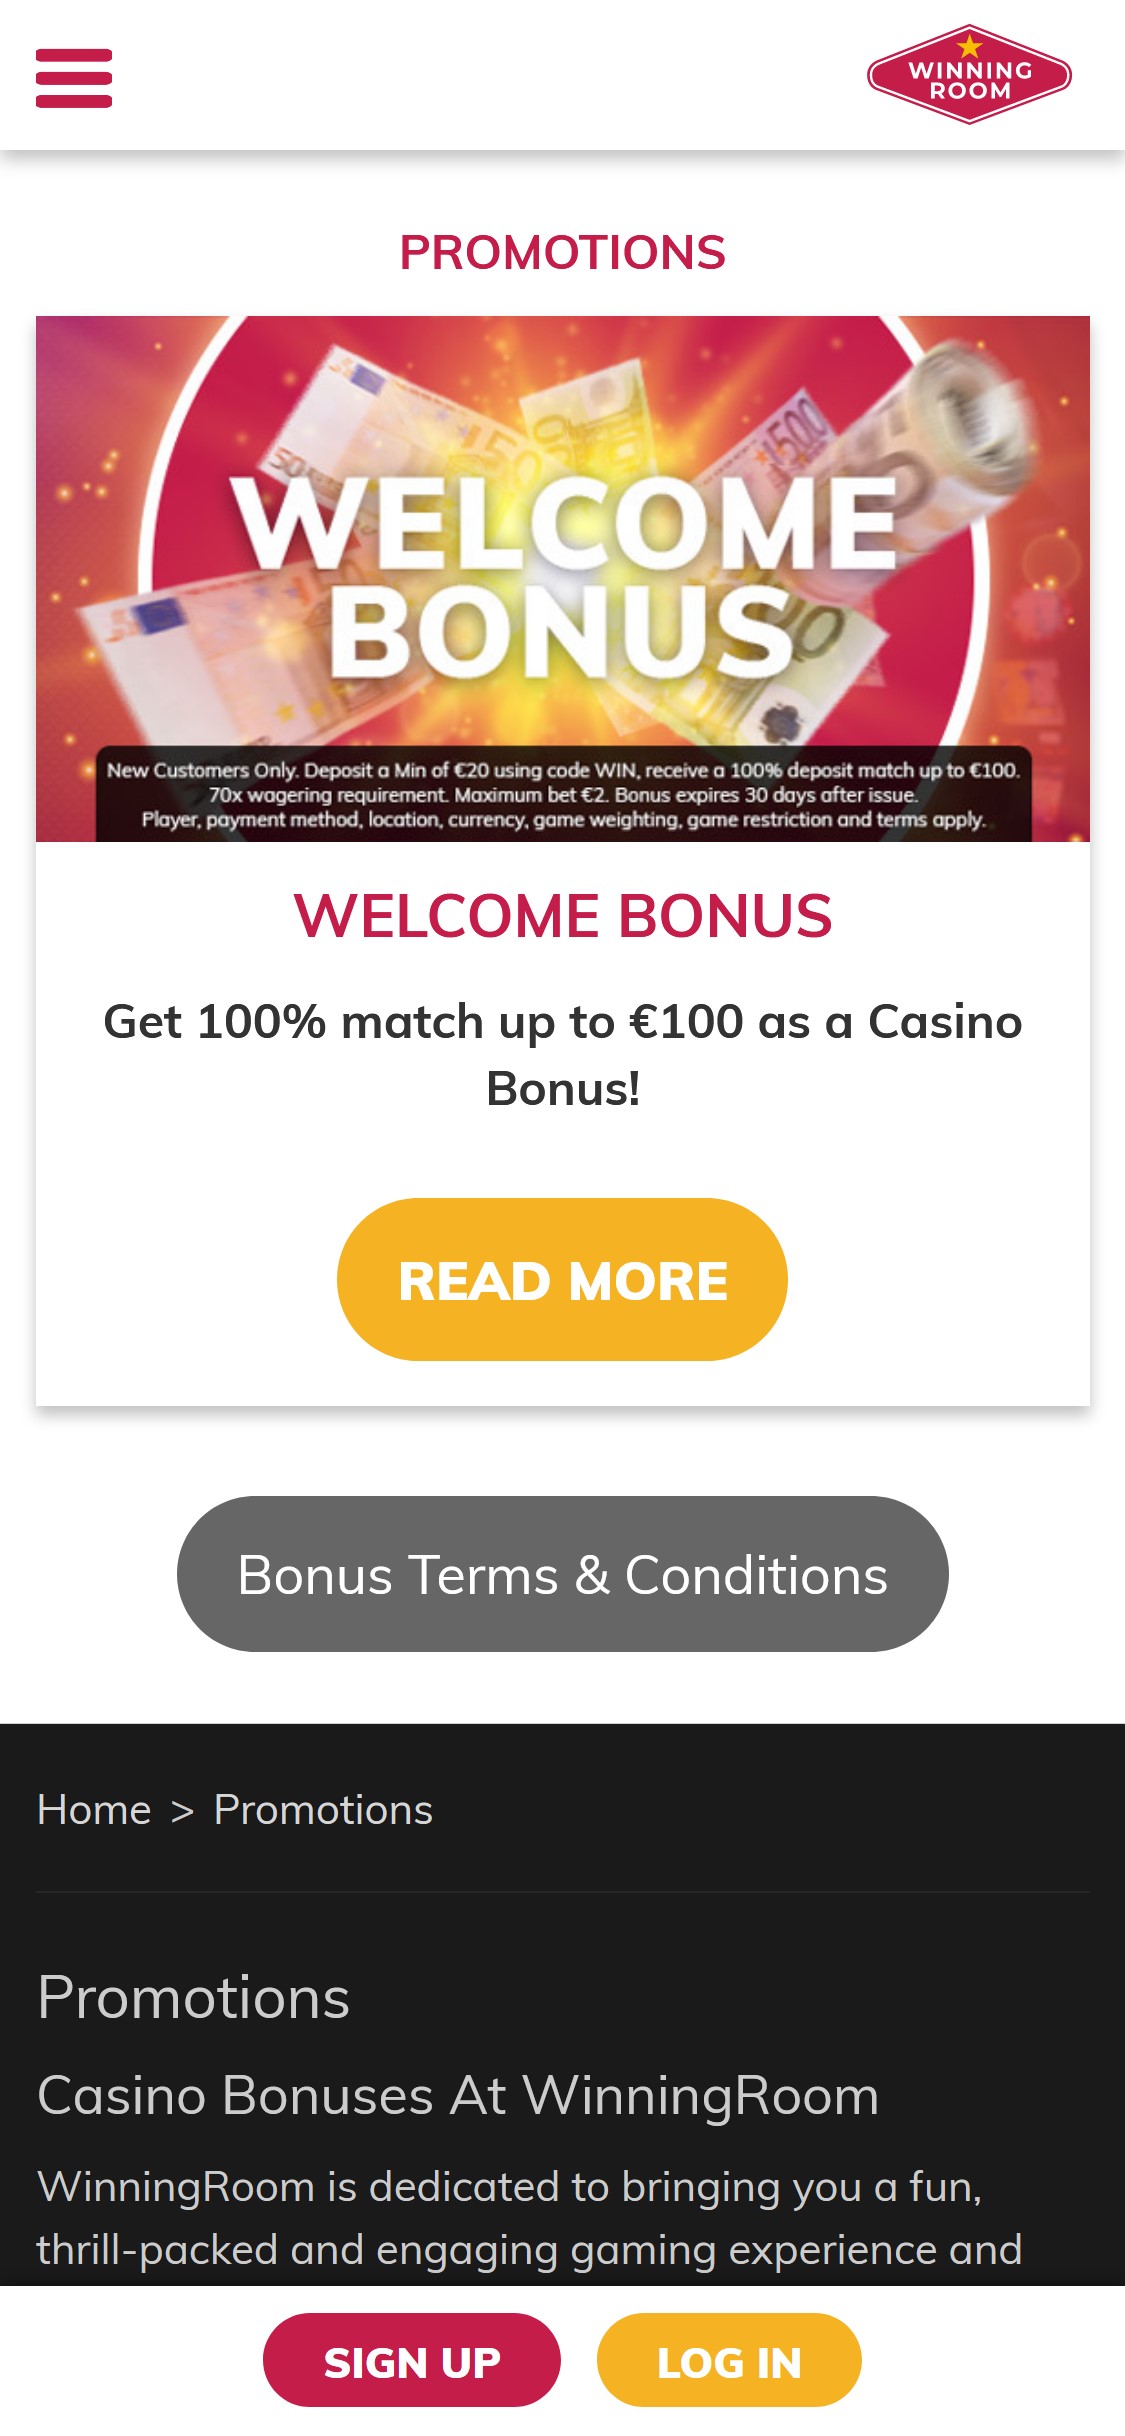 Winning Room Casino Mobile No Deposit Bonus Review